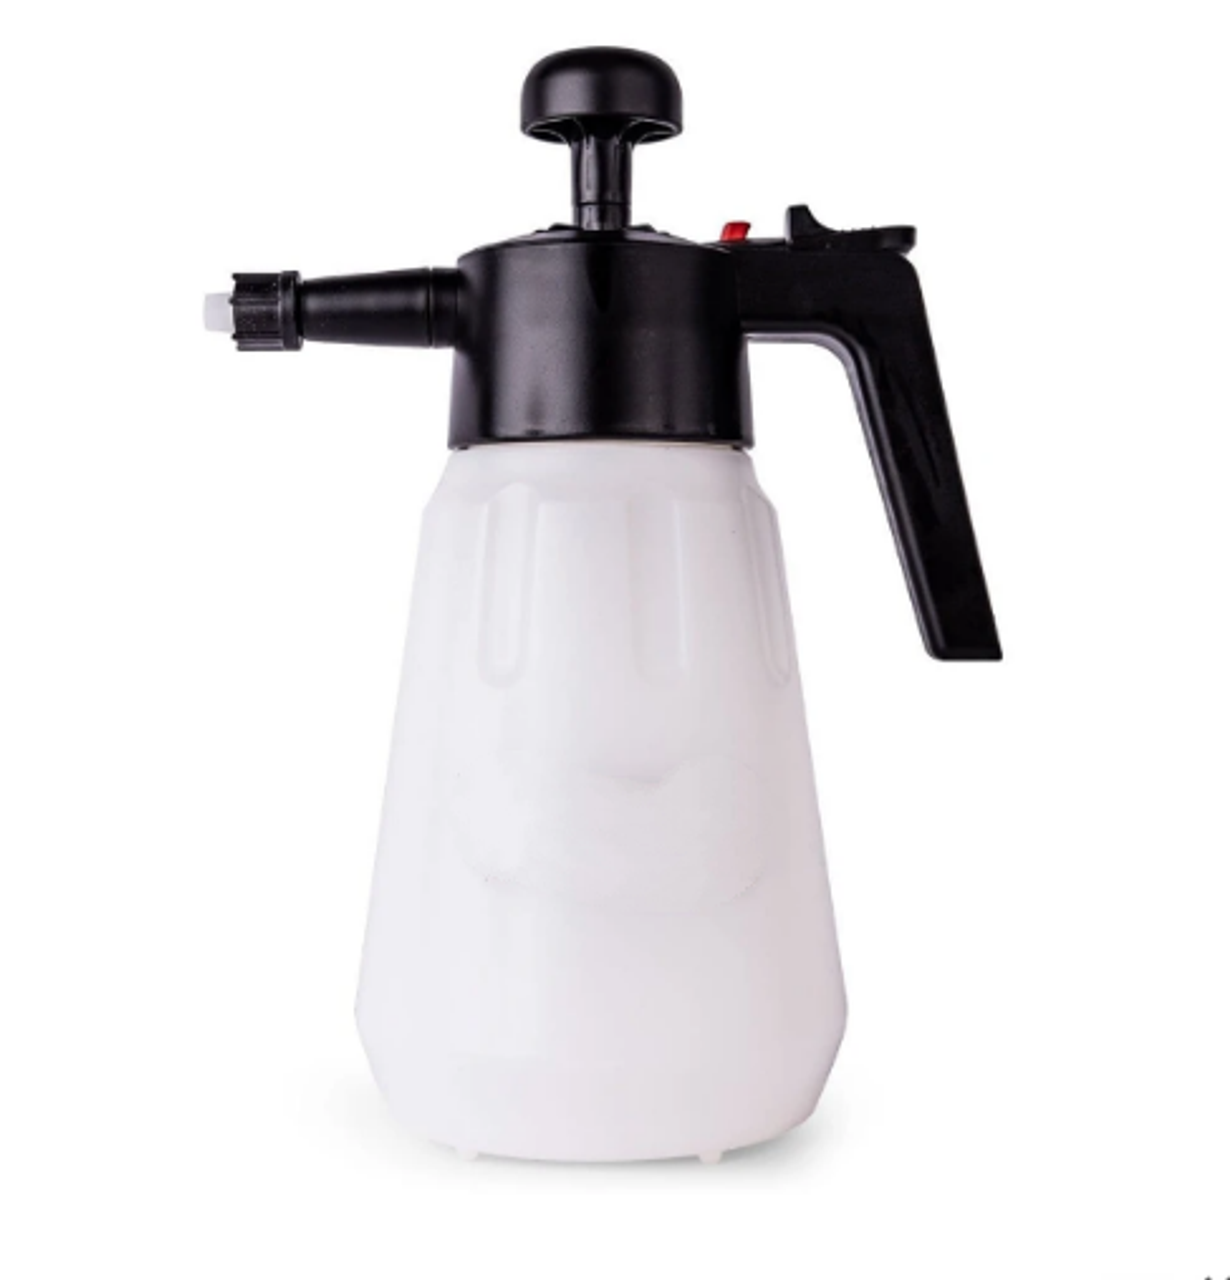 Polaris Ranger/General Hand Pump Foam Sprayer by Slick Products